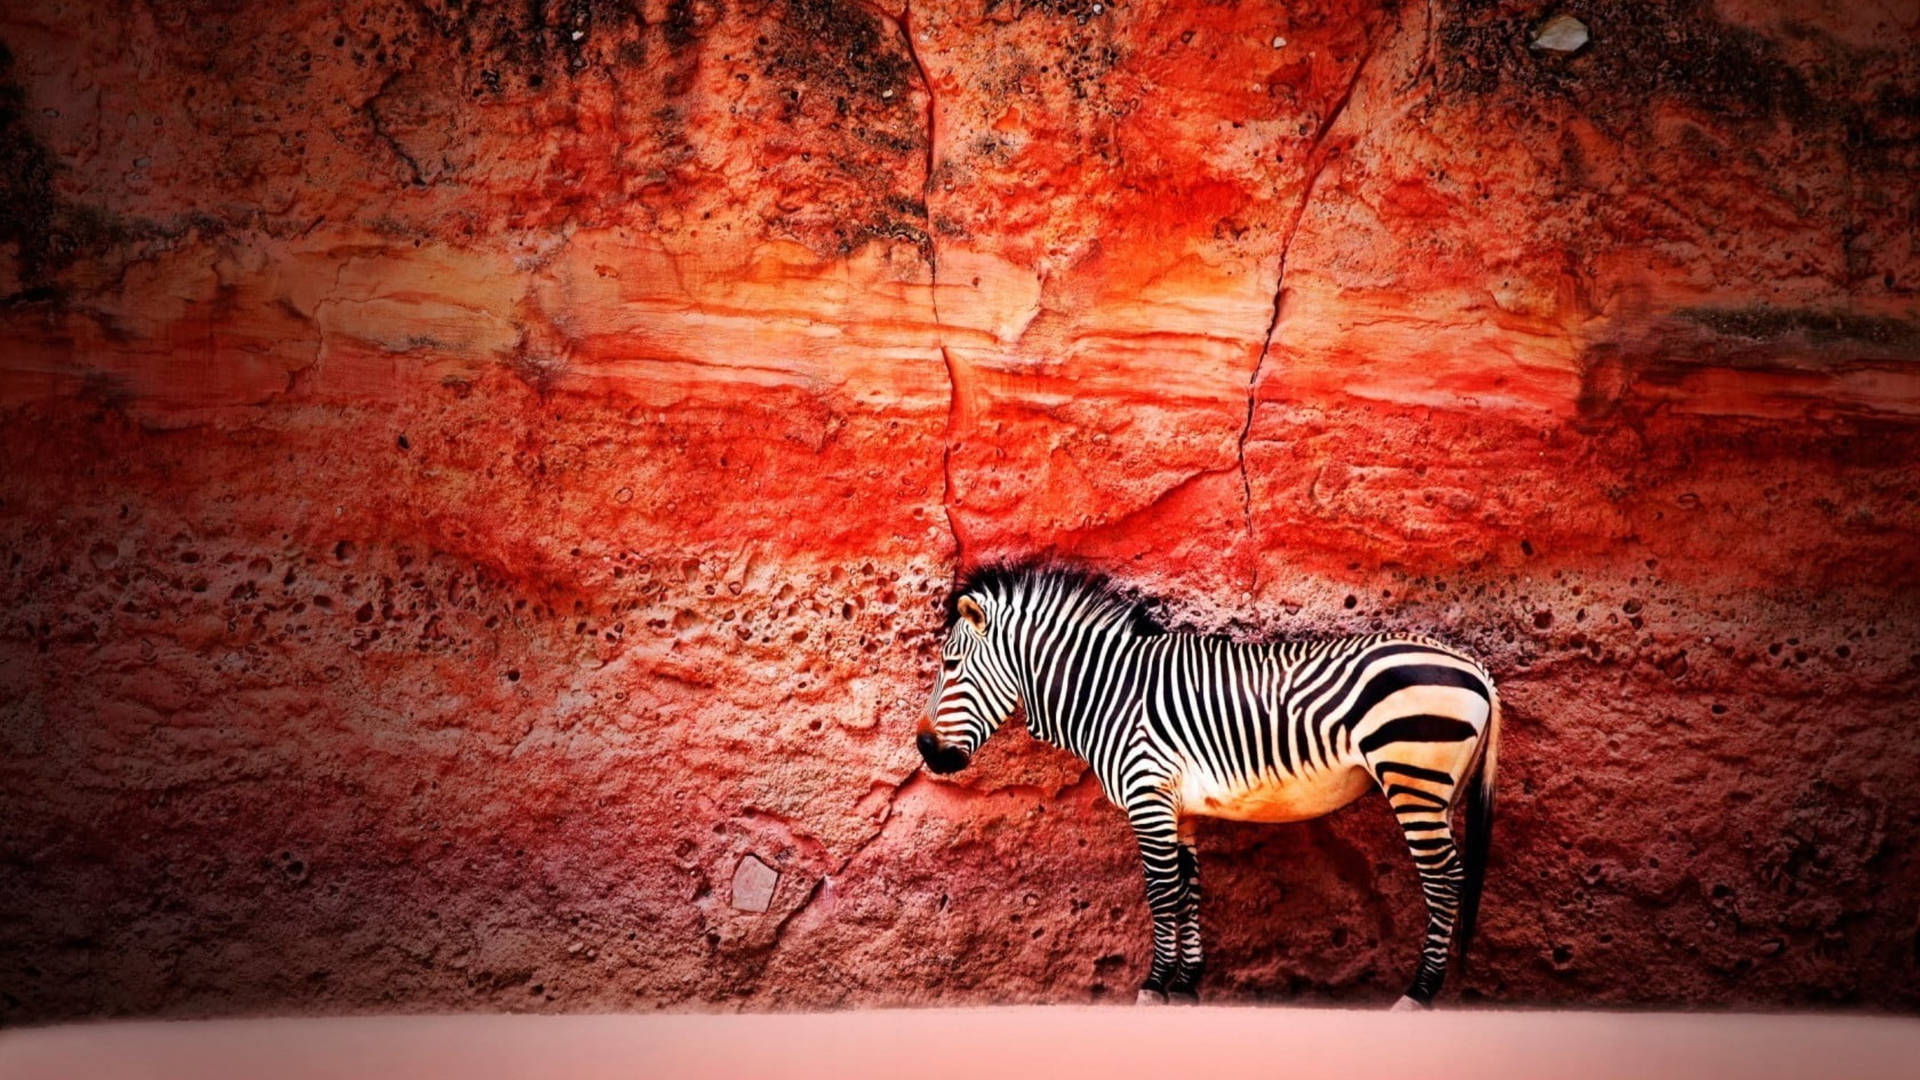 Zebra Against Red Rock Wall Wallpaper